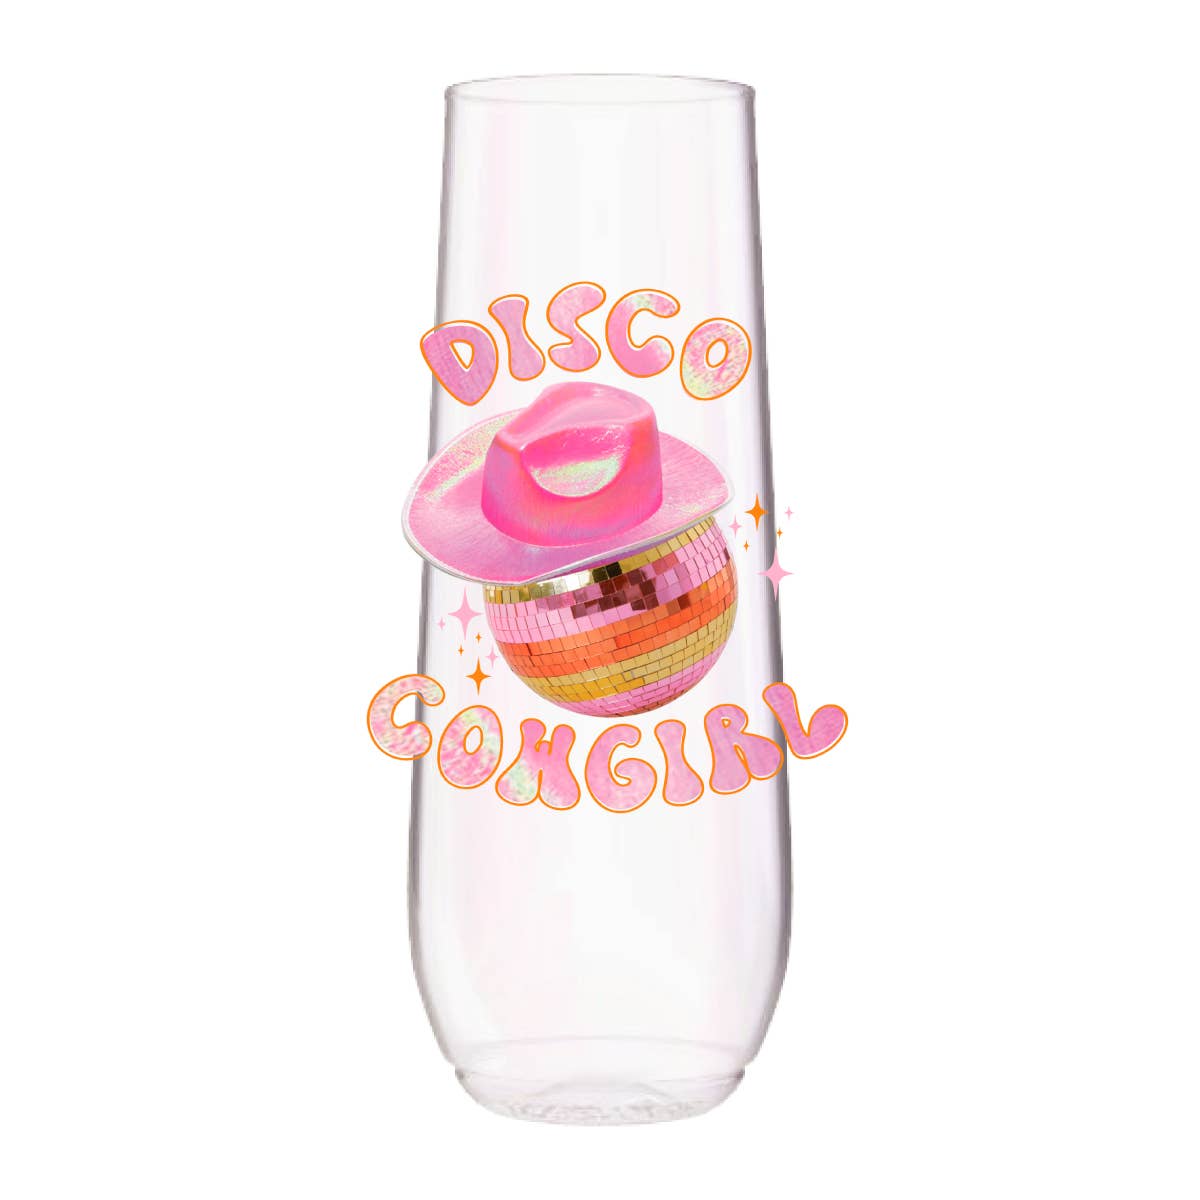 Disco Cowgirl Champagne Flute Tossware 4ct